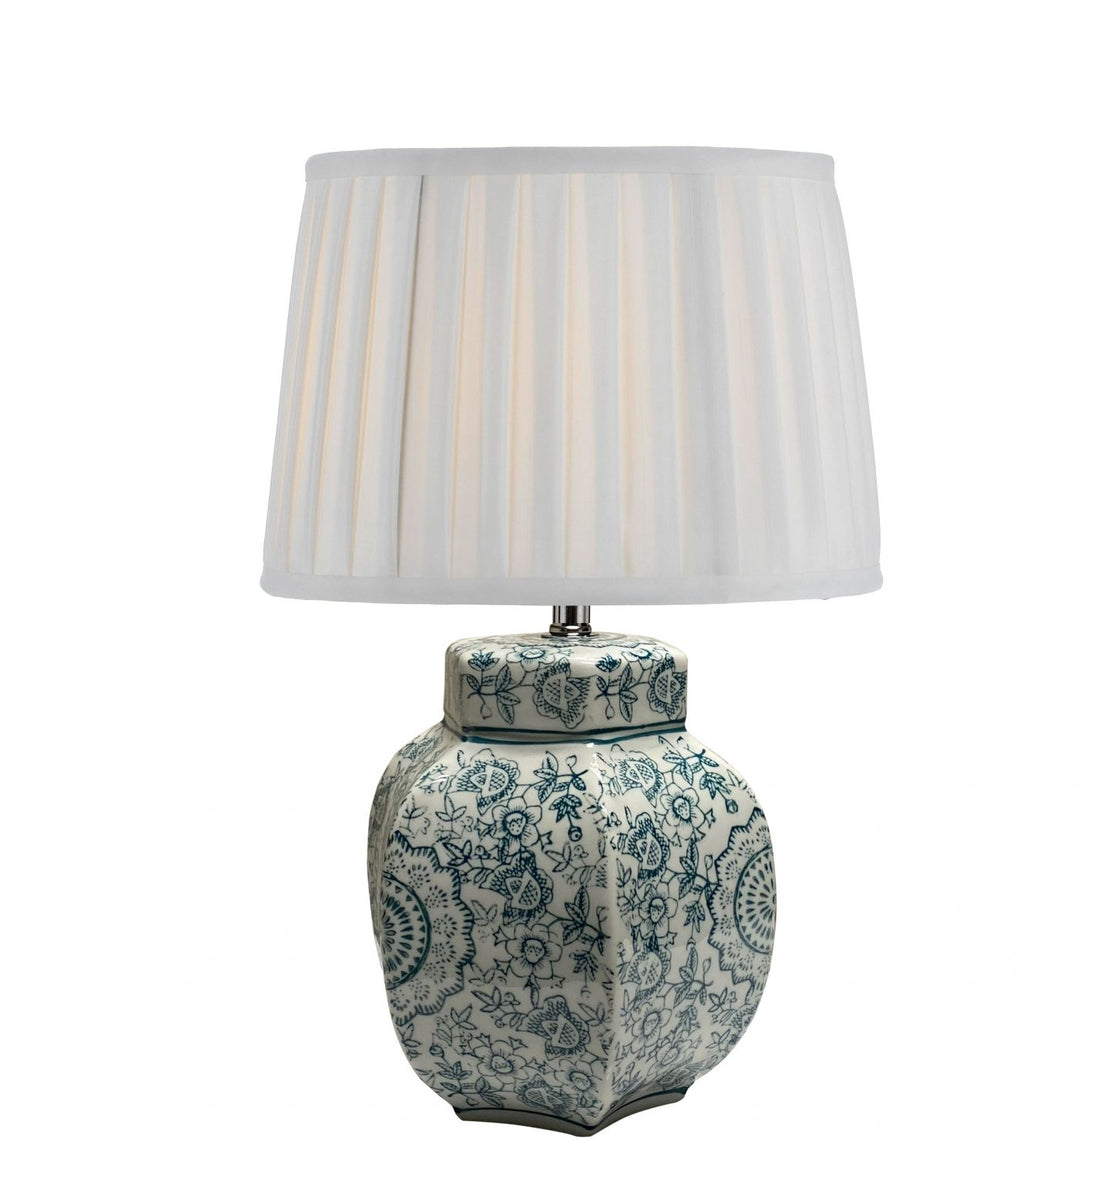 Padma Provincial Art Decor Table Lamp